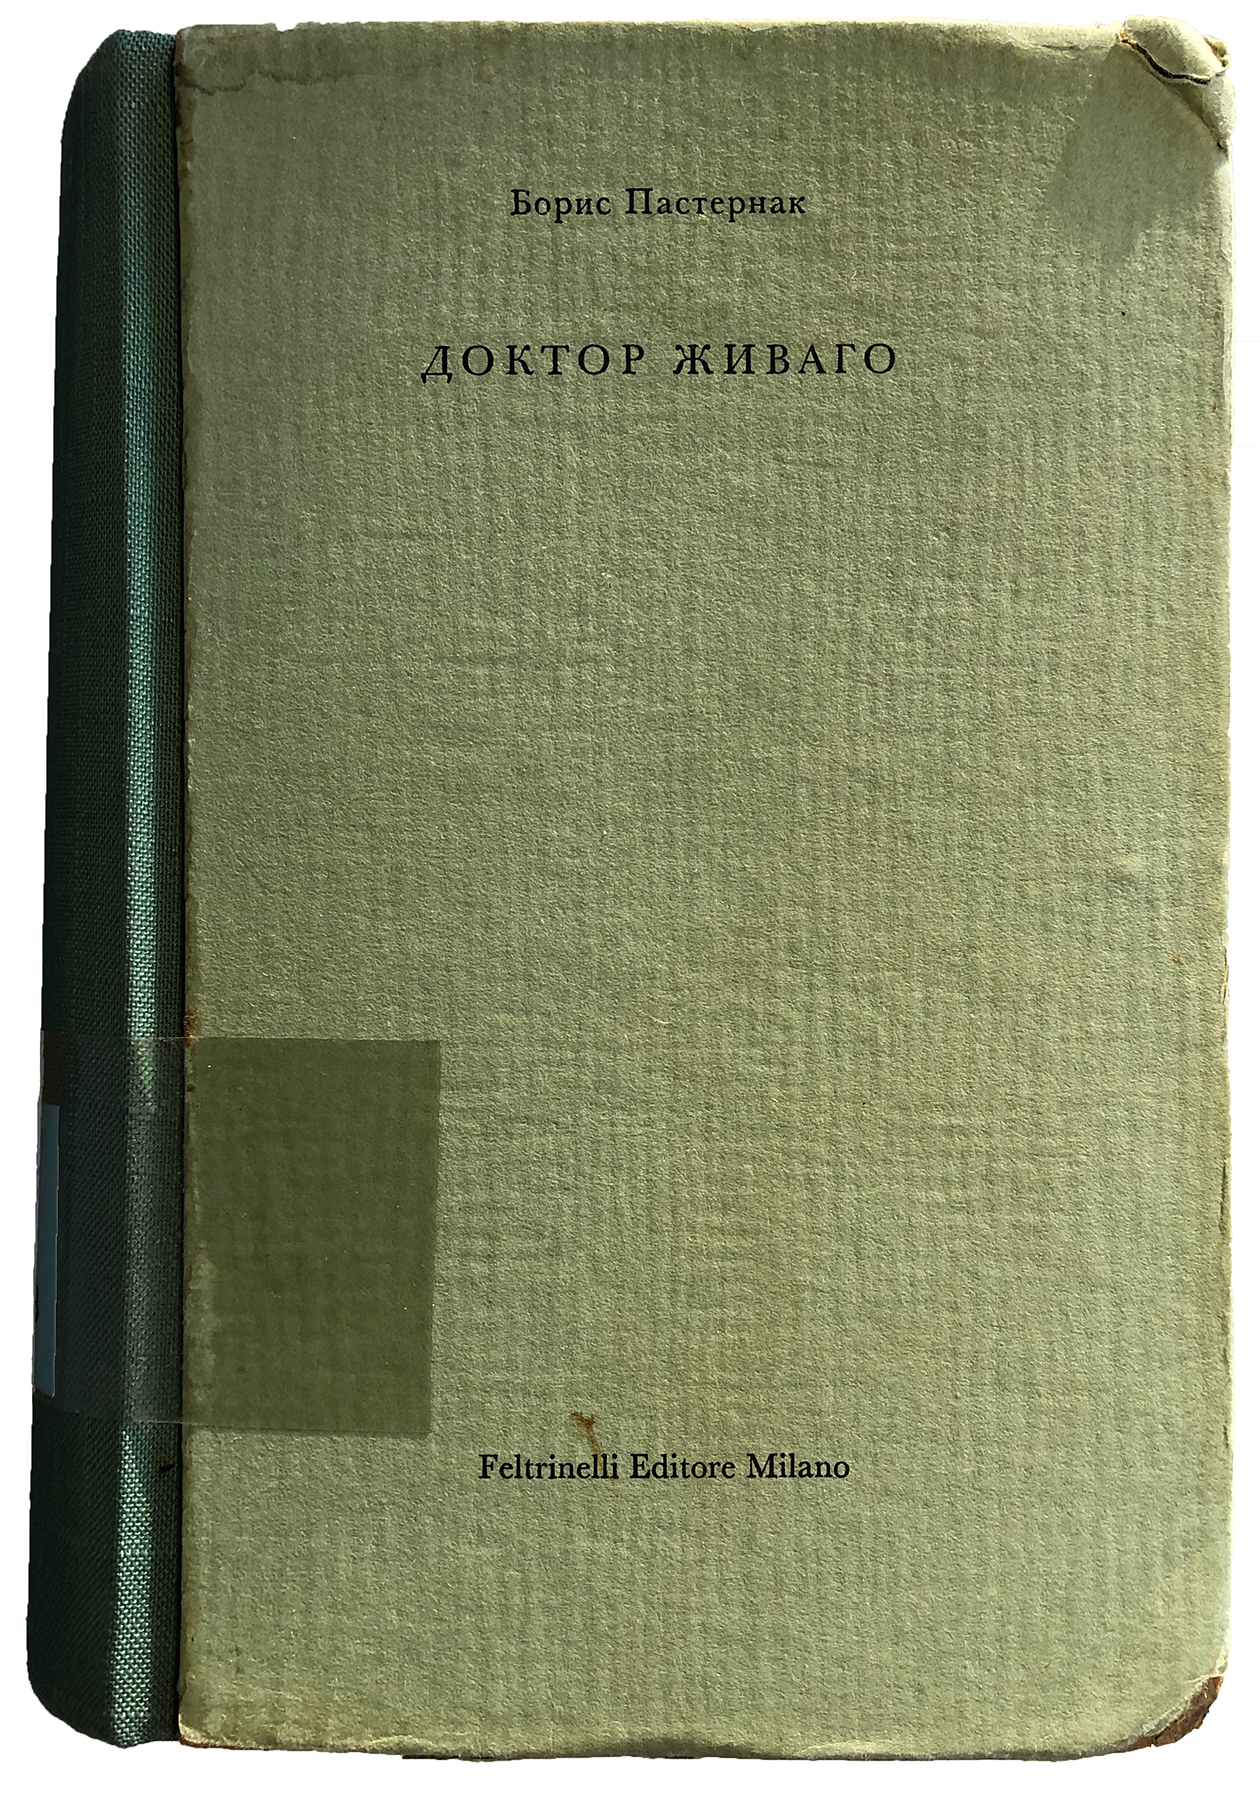 Doctor Zhivago by Boris Pasternak, Milan, c. 1957; shelf mark RBC 3598. (Image: ZB Zürich)